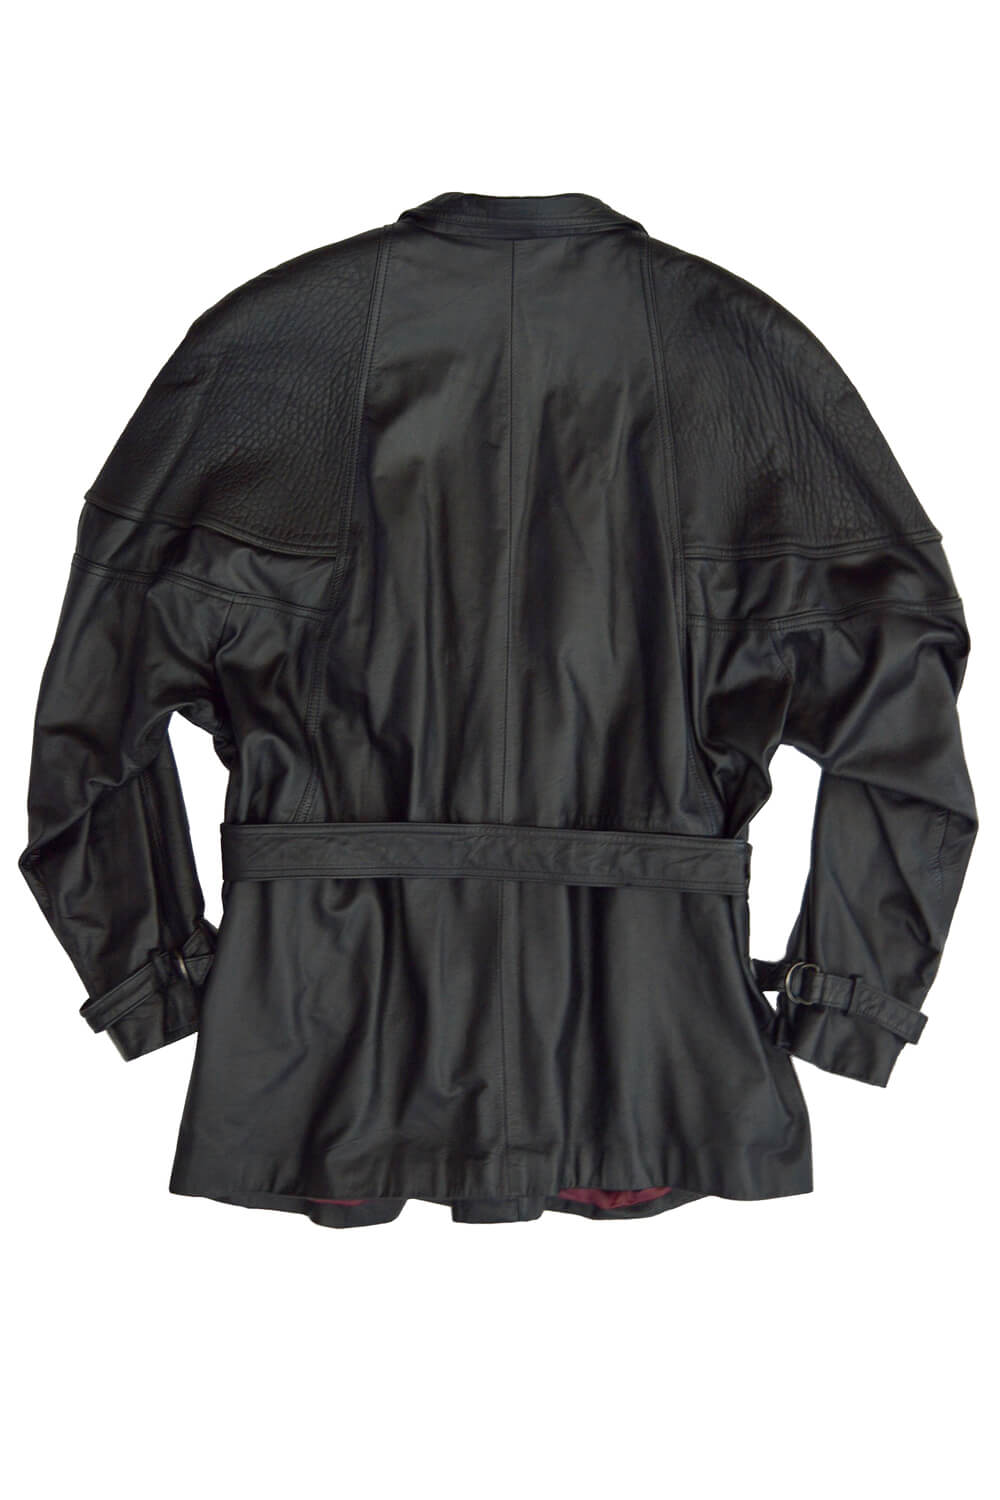 vintage 80's belted leather jacket - black - size extra large